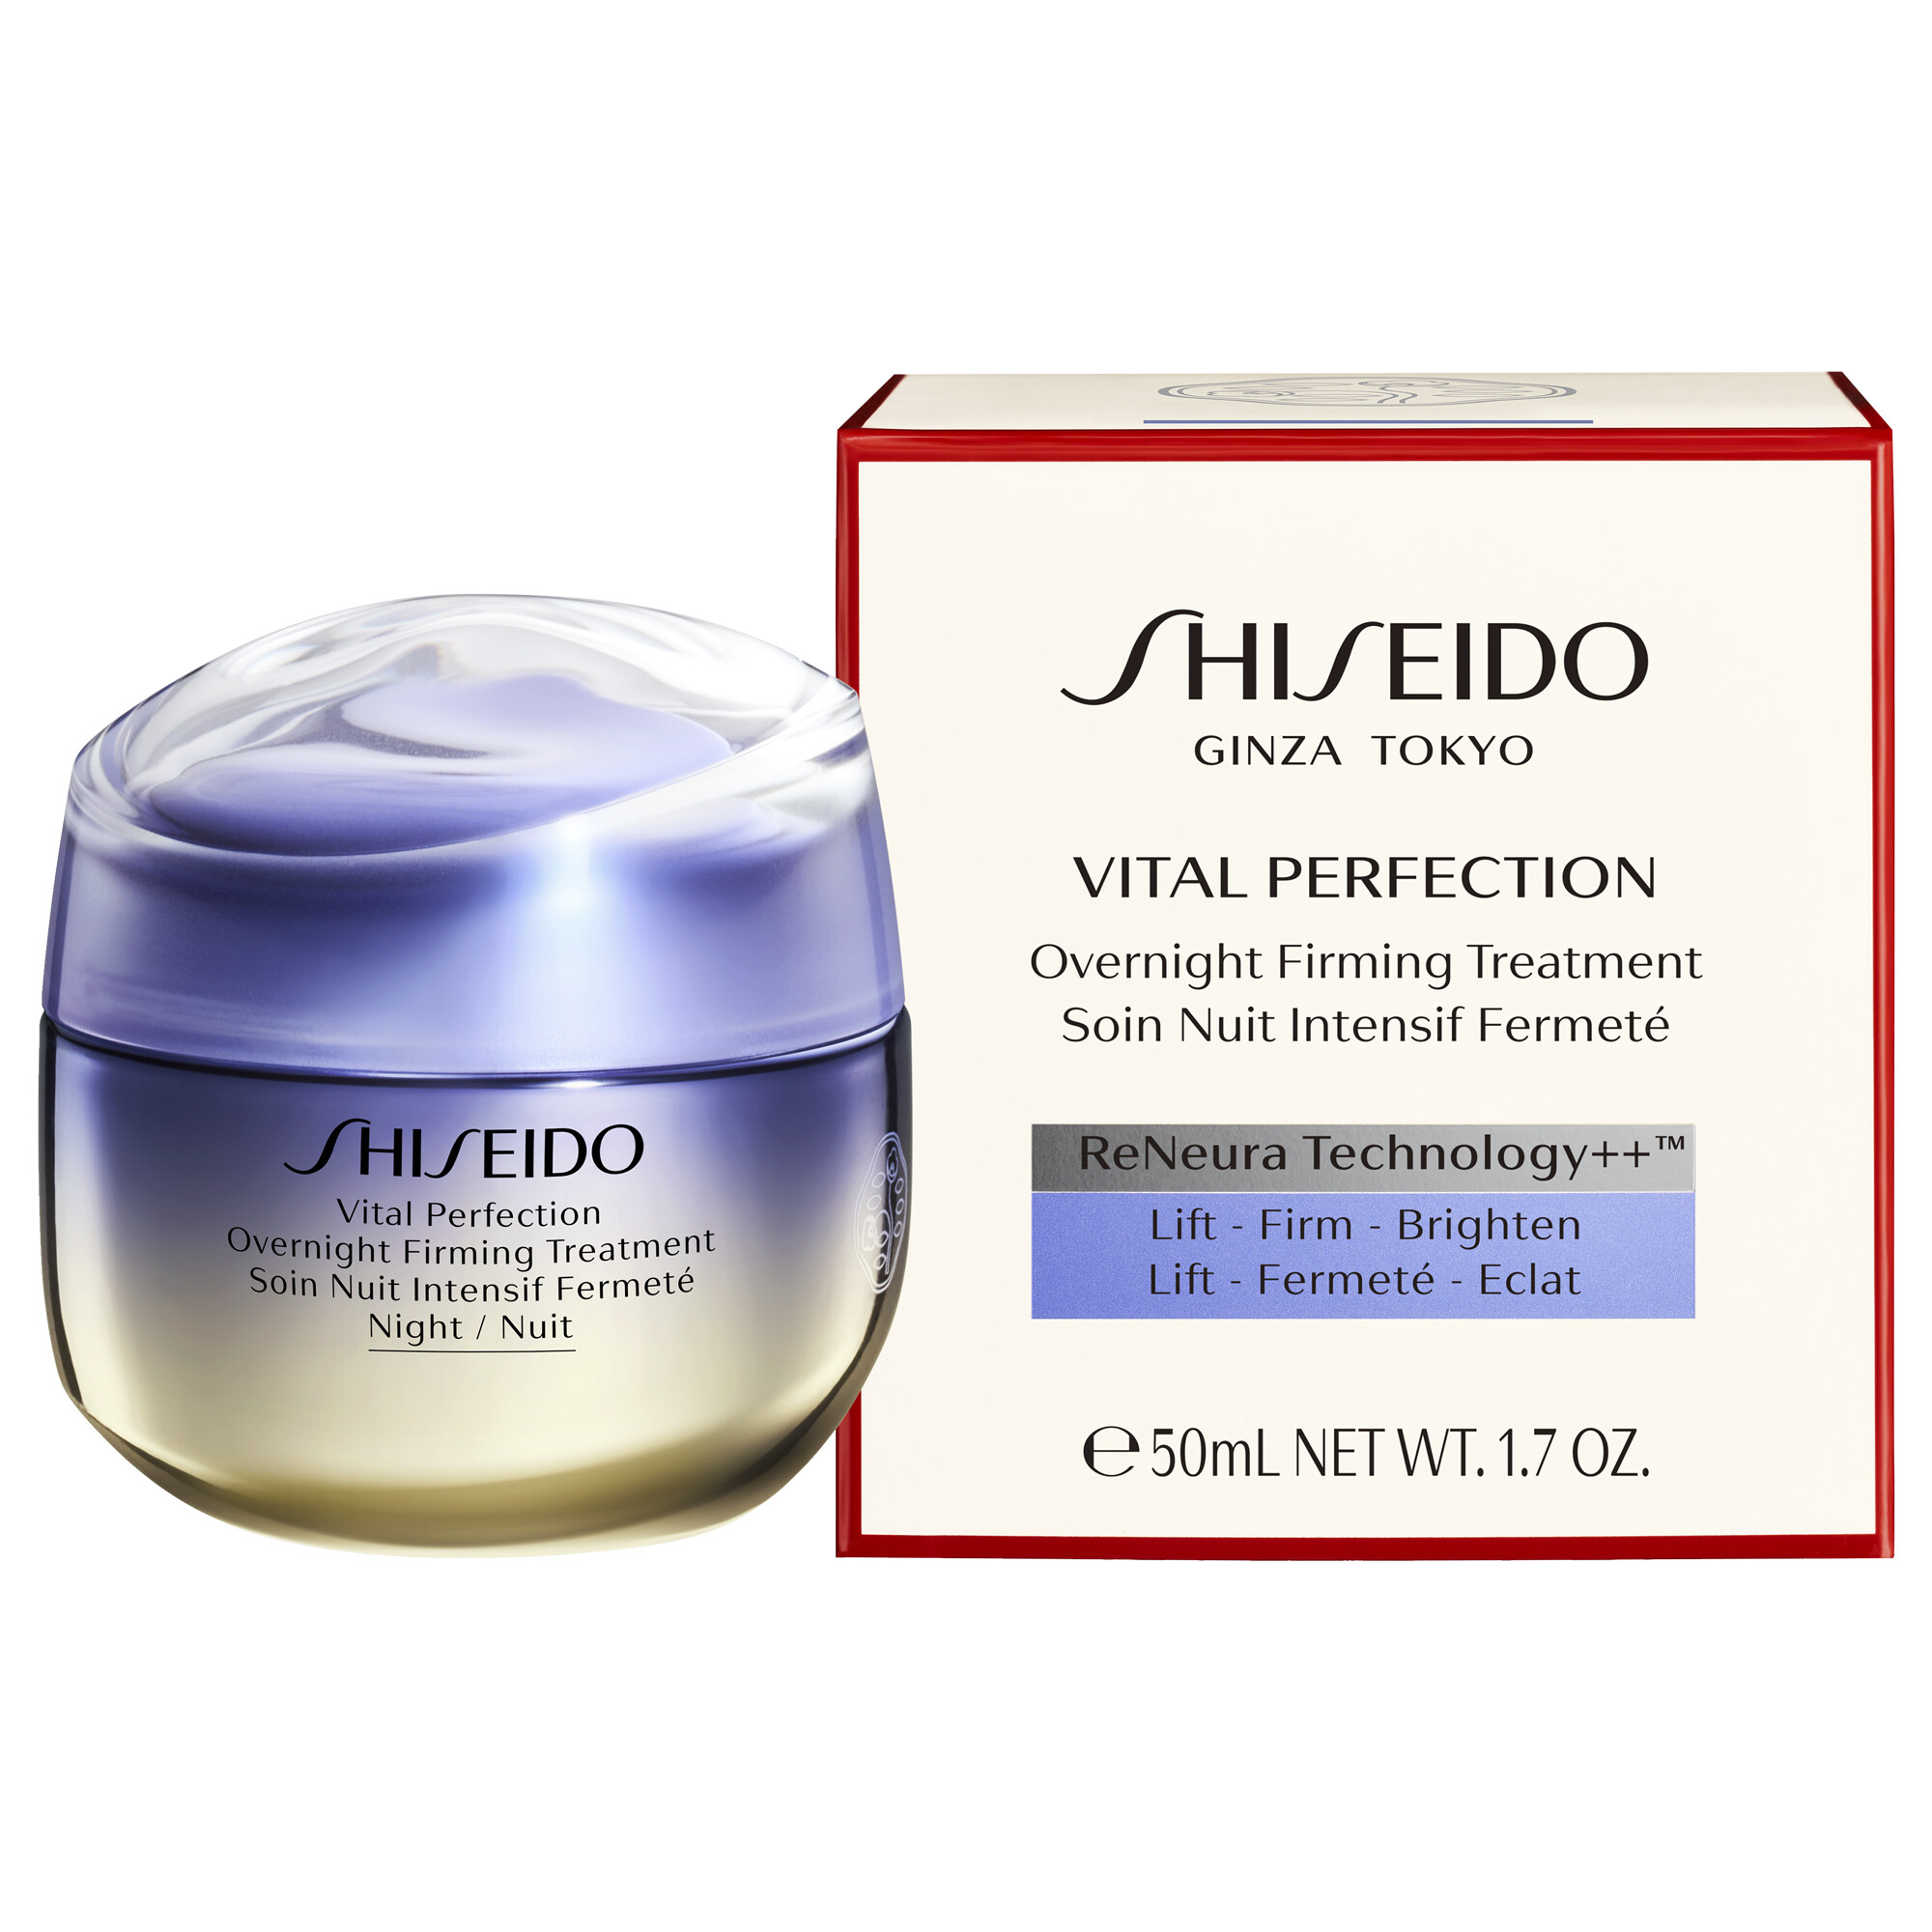 Gesichtspflege Shiseido Shiseido Vital Perfection Overnight Firming Treatment 50ml Thiemann